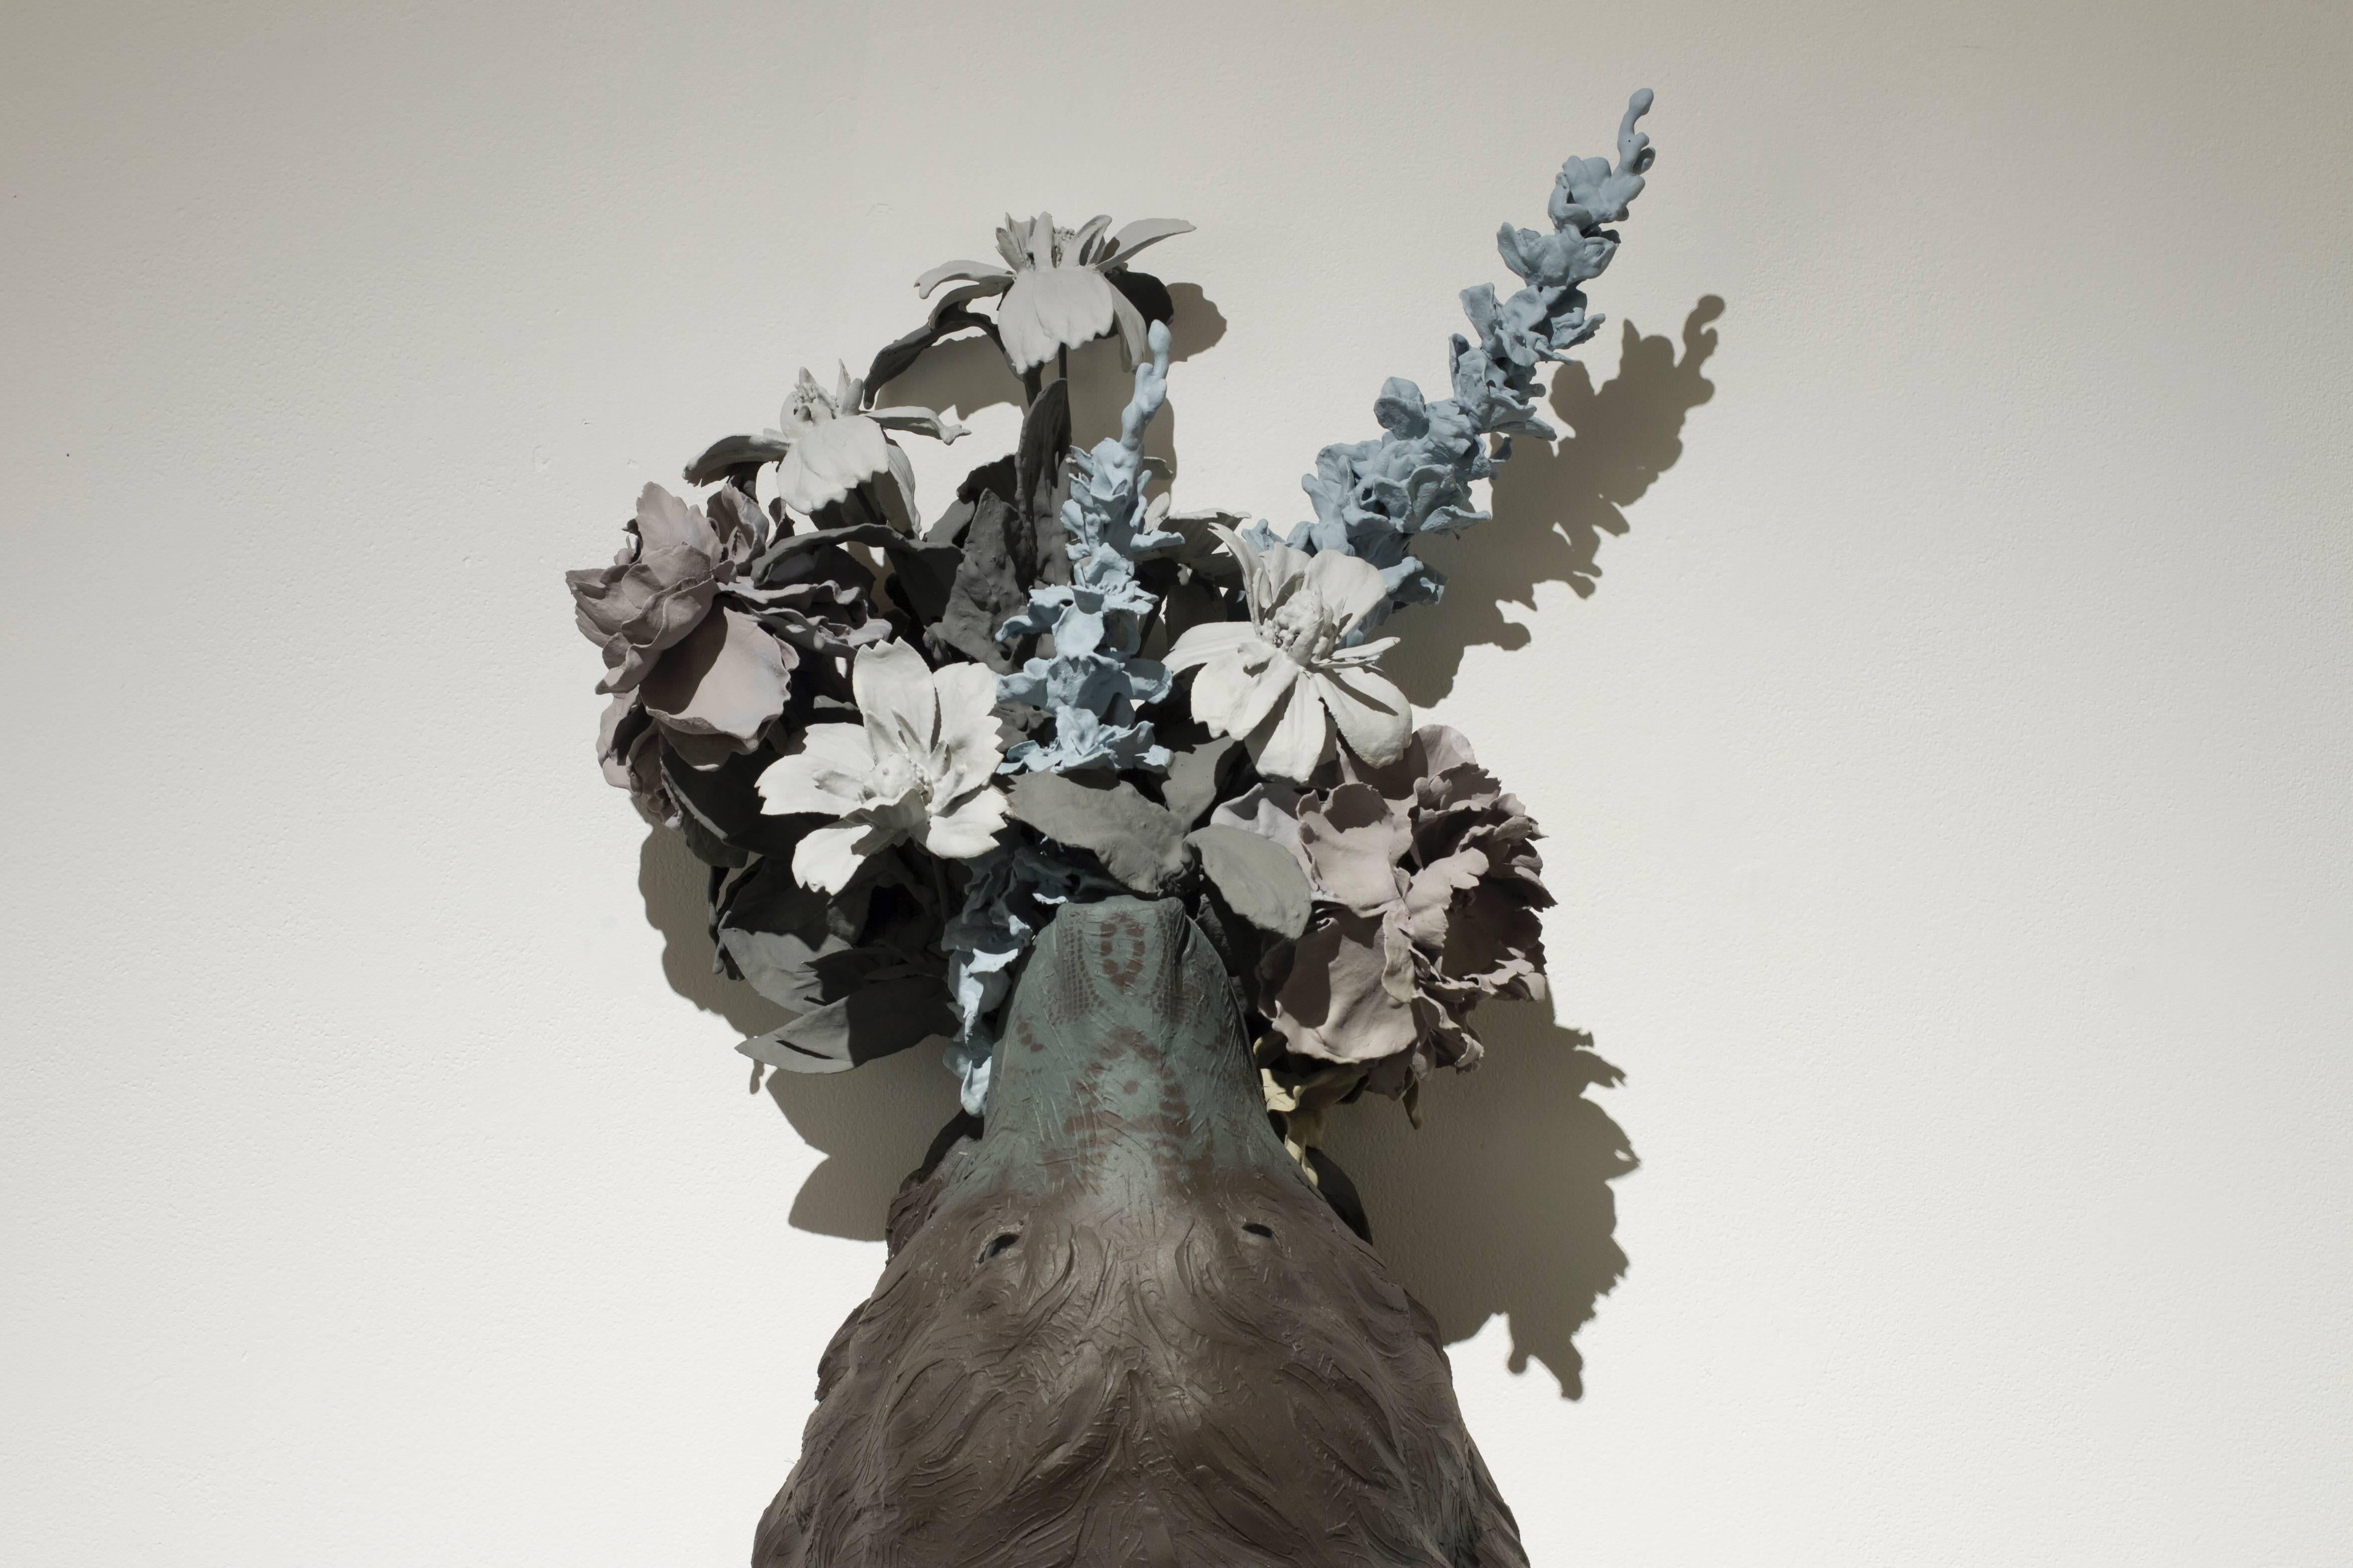 Abstract Sculpture Nicholas Crombach - Nature morte